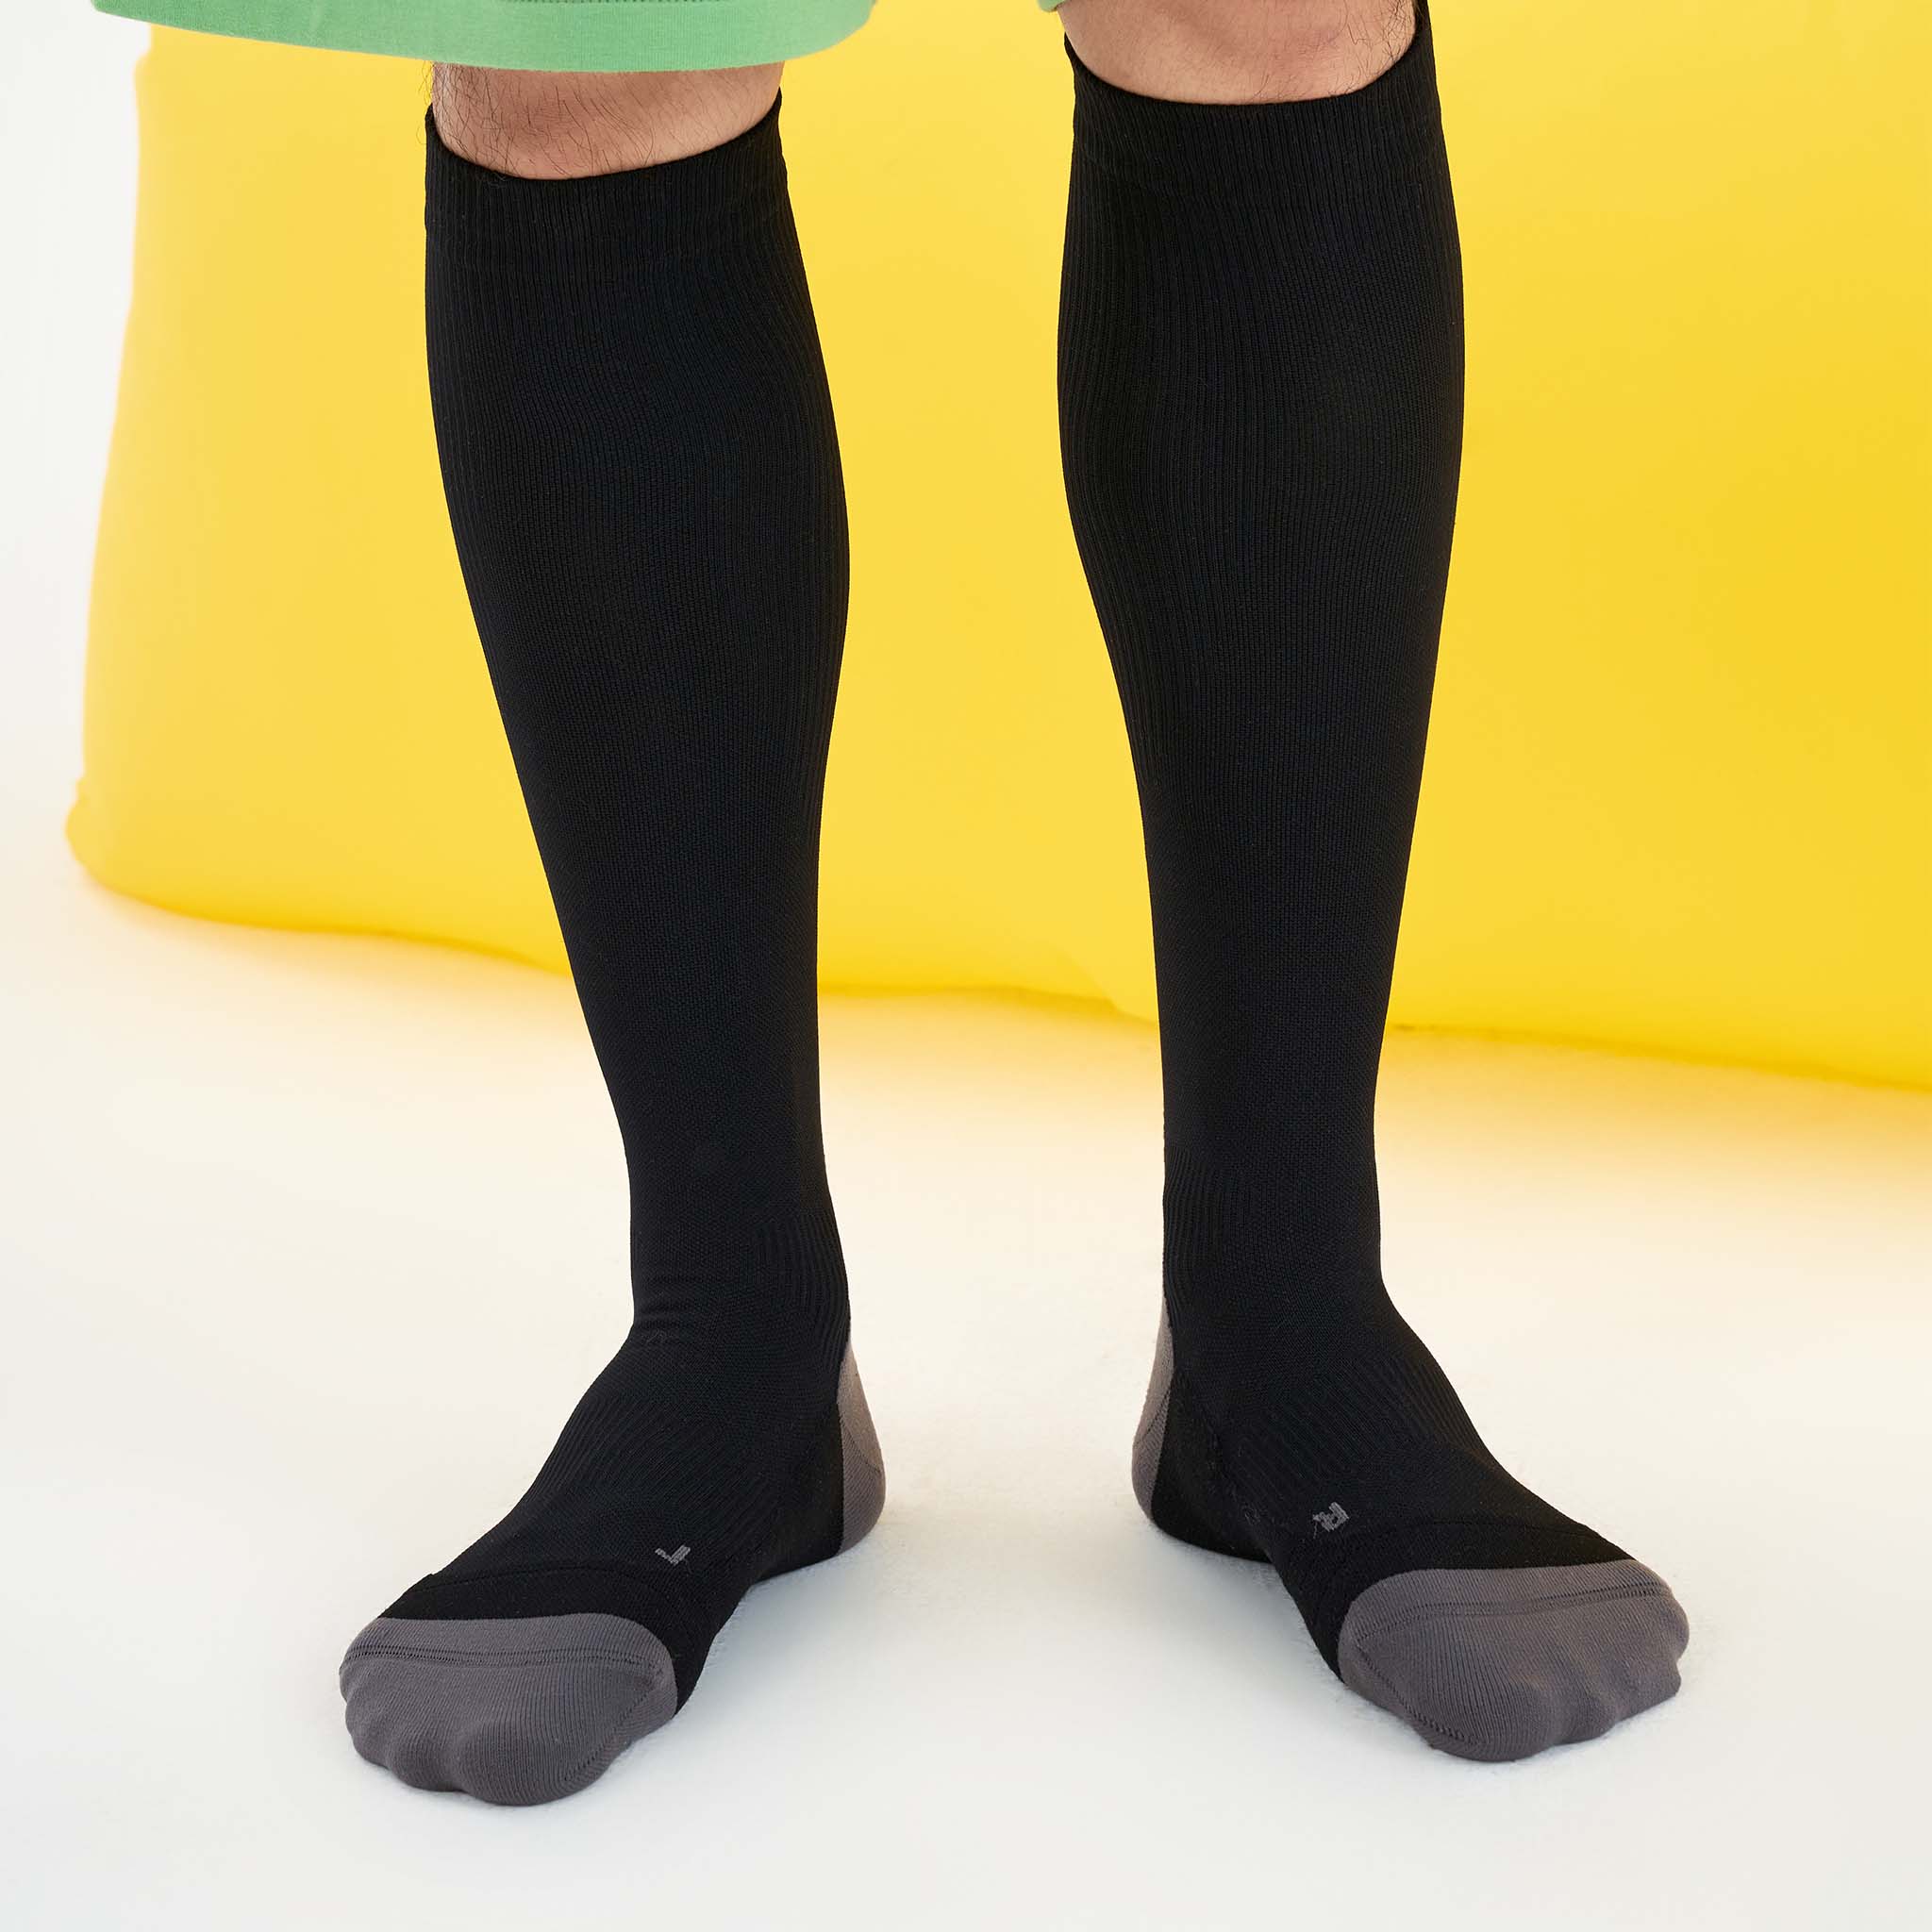 elastic Mens Socks For Workout in black